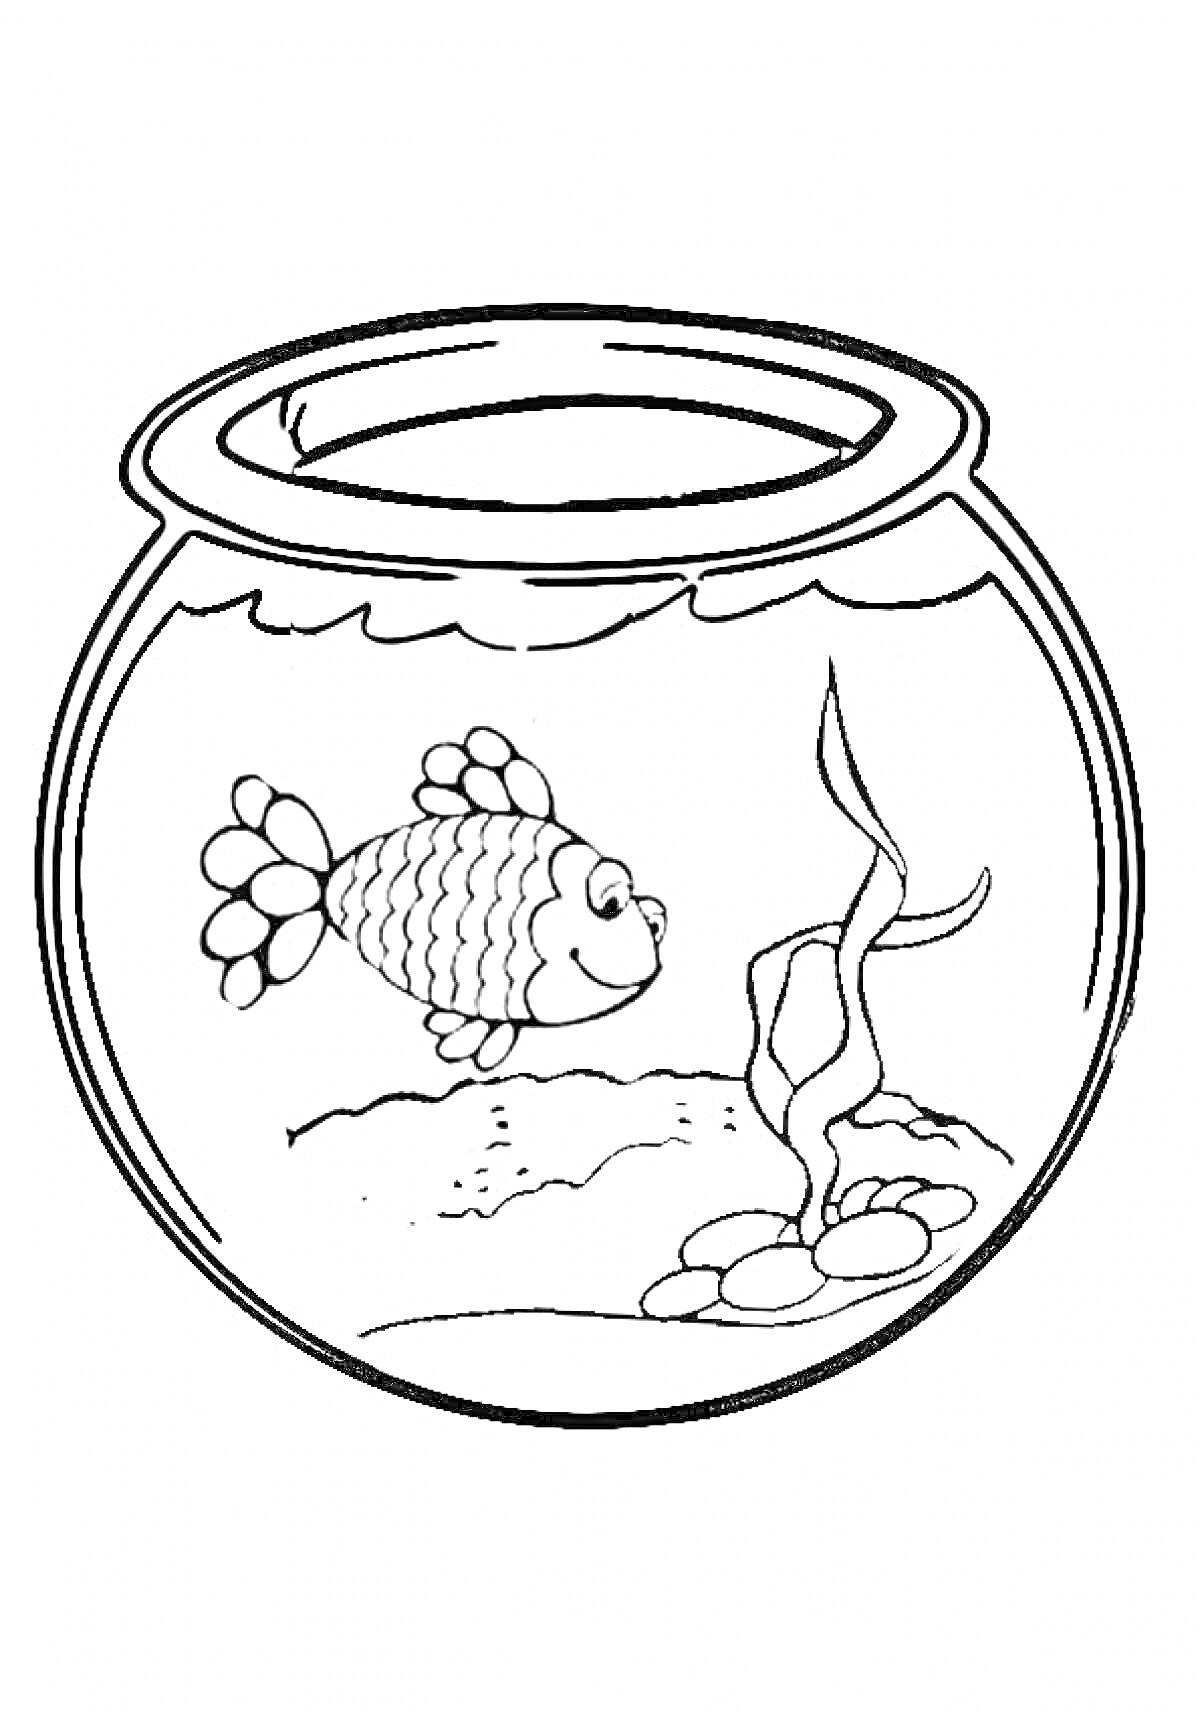 РаскраскаРыбка в круглом аквариуме с водорослями и камнями